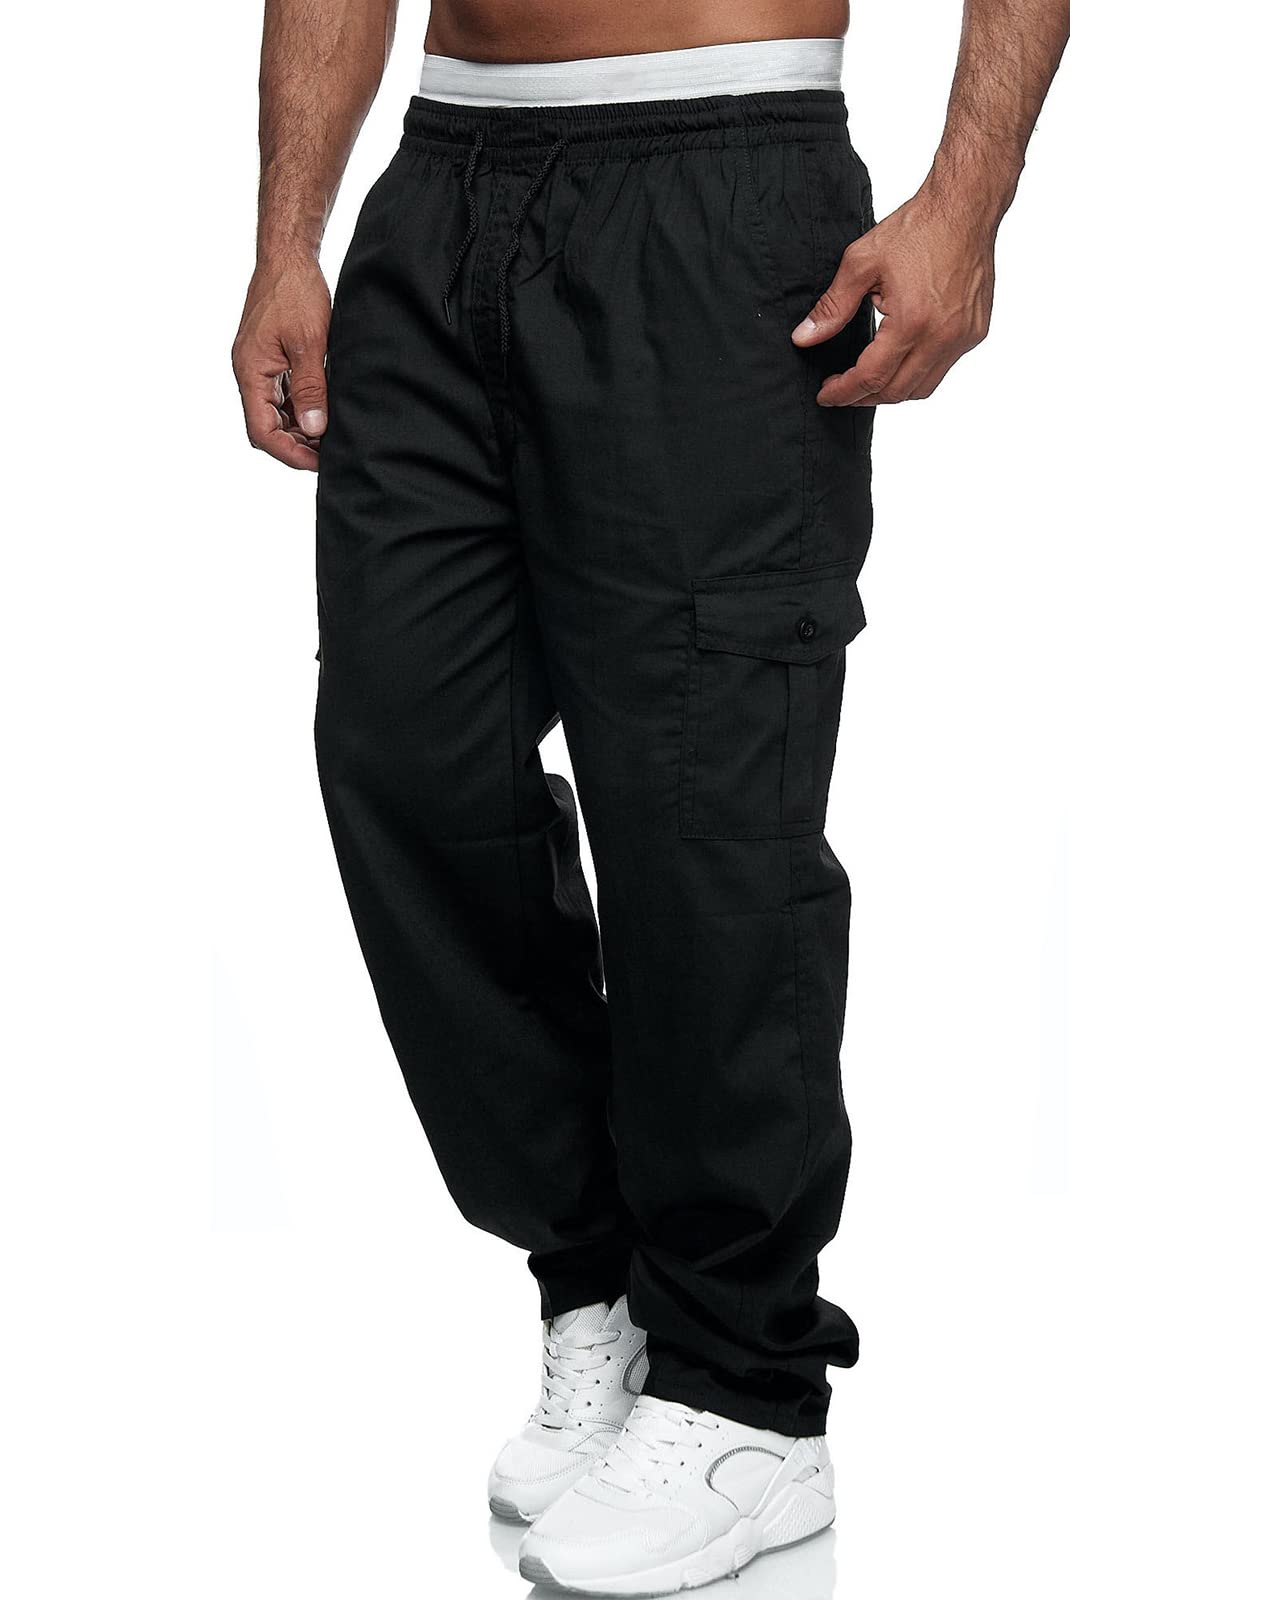 Men's Cargo Pants Relaxed Fit Sport Pants Jogger Sweatpants